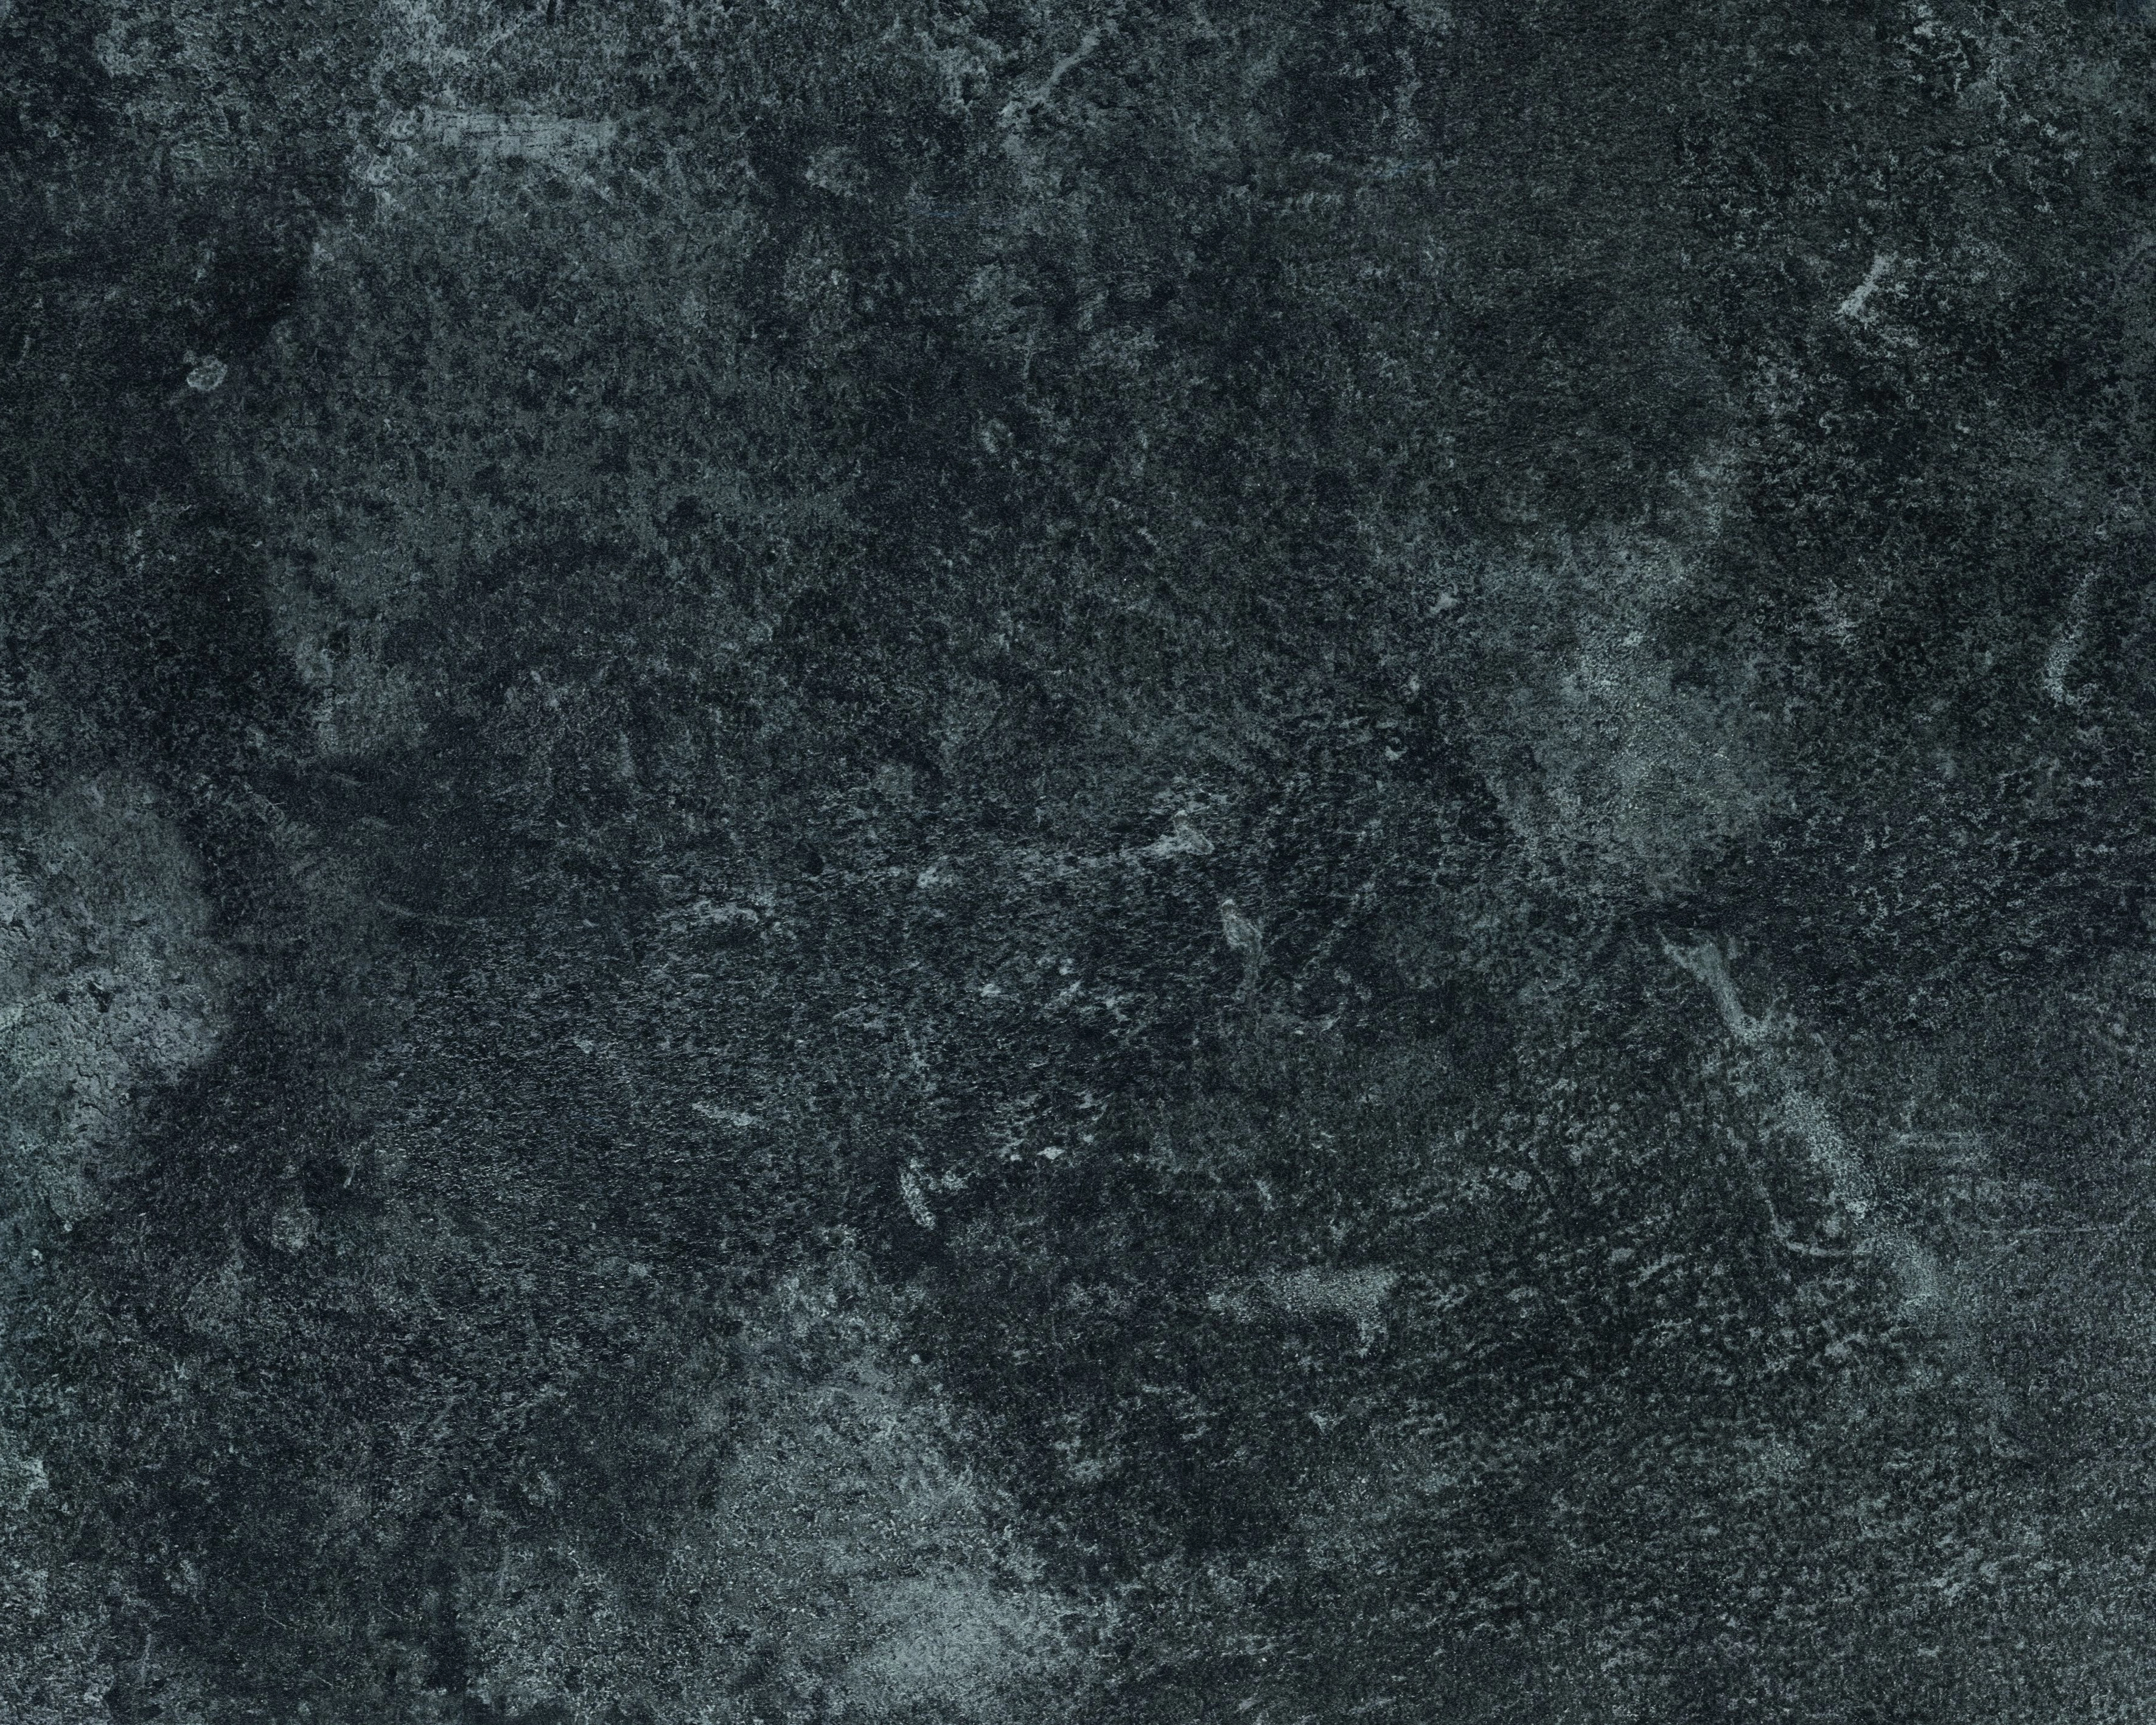 d-c-fix Betonoptikfolie (200 x 67.5 cm, Avellino, Schwarz, Selbstklebend)